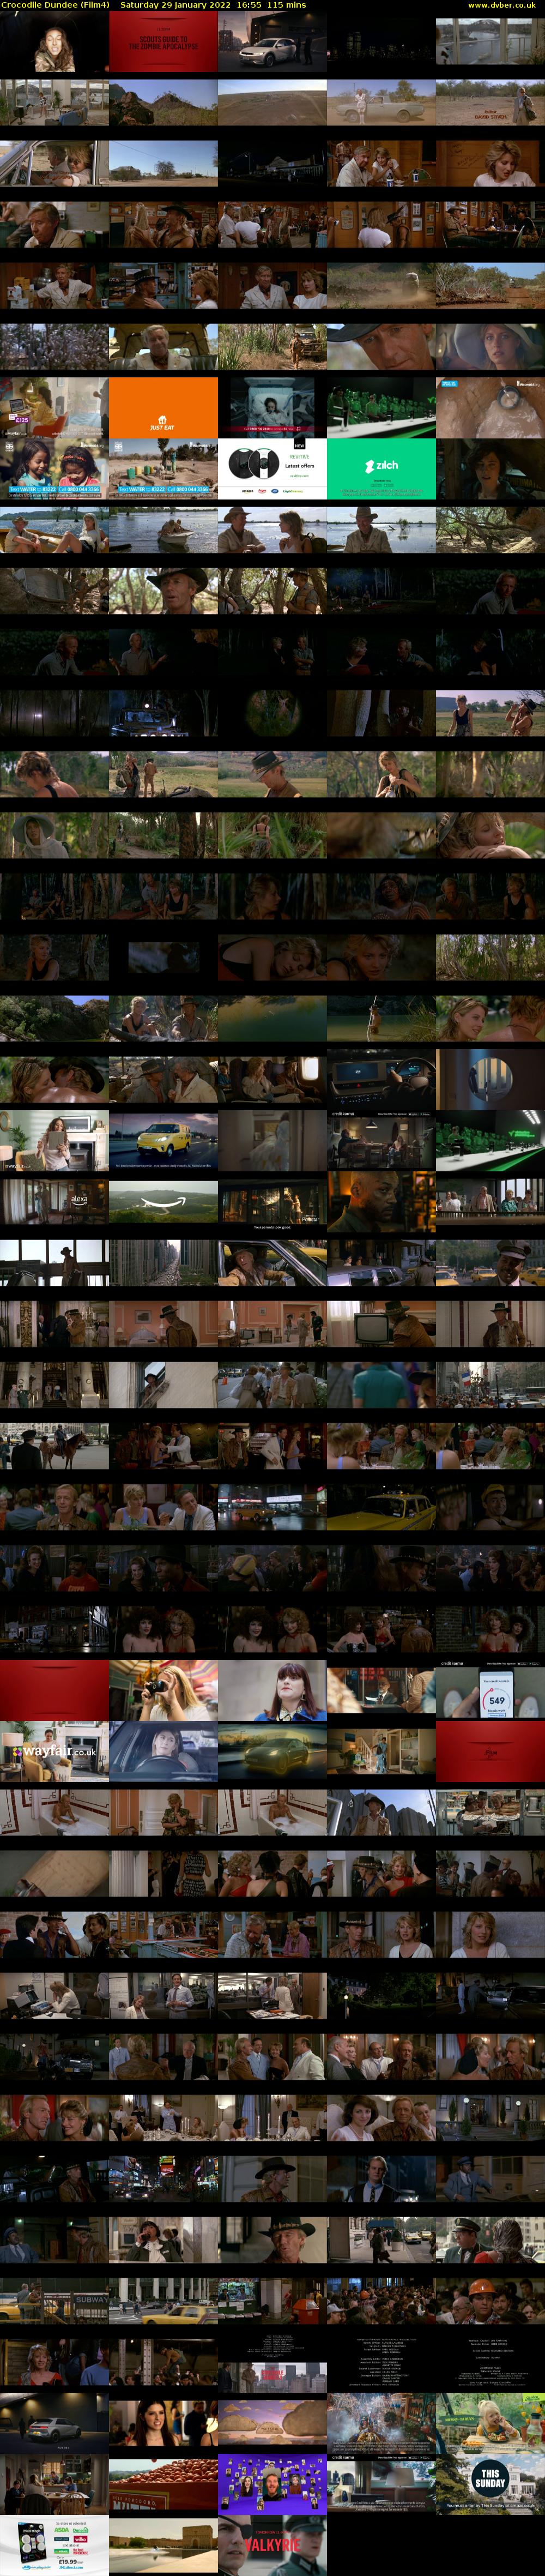 Crocodile Dundee (Film4) Saturday 29 January 2022 16:55 - 18:50